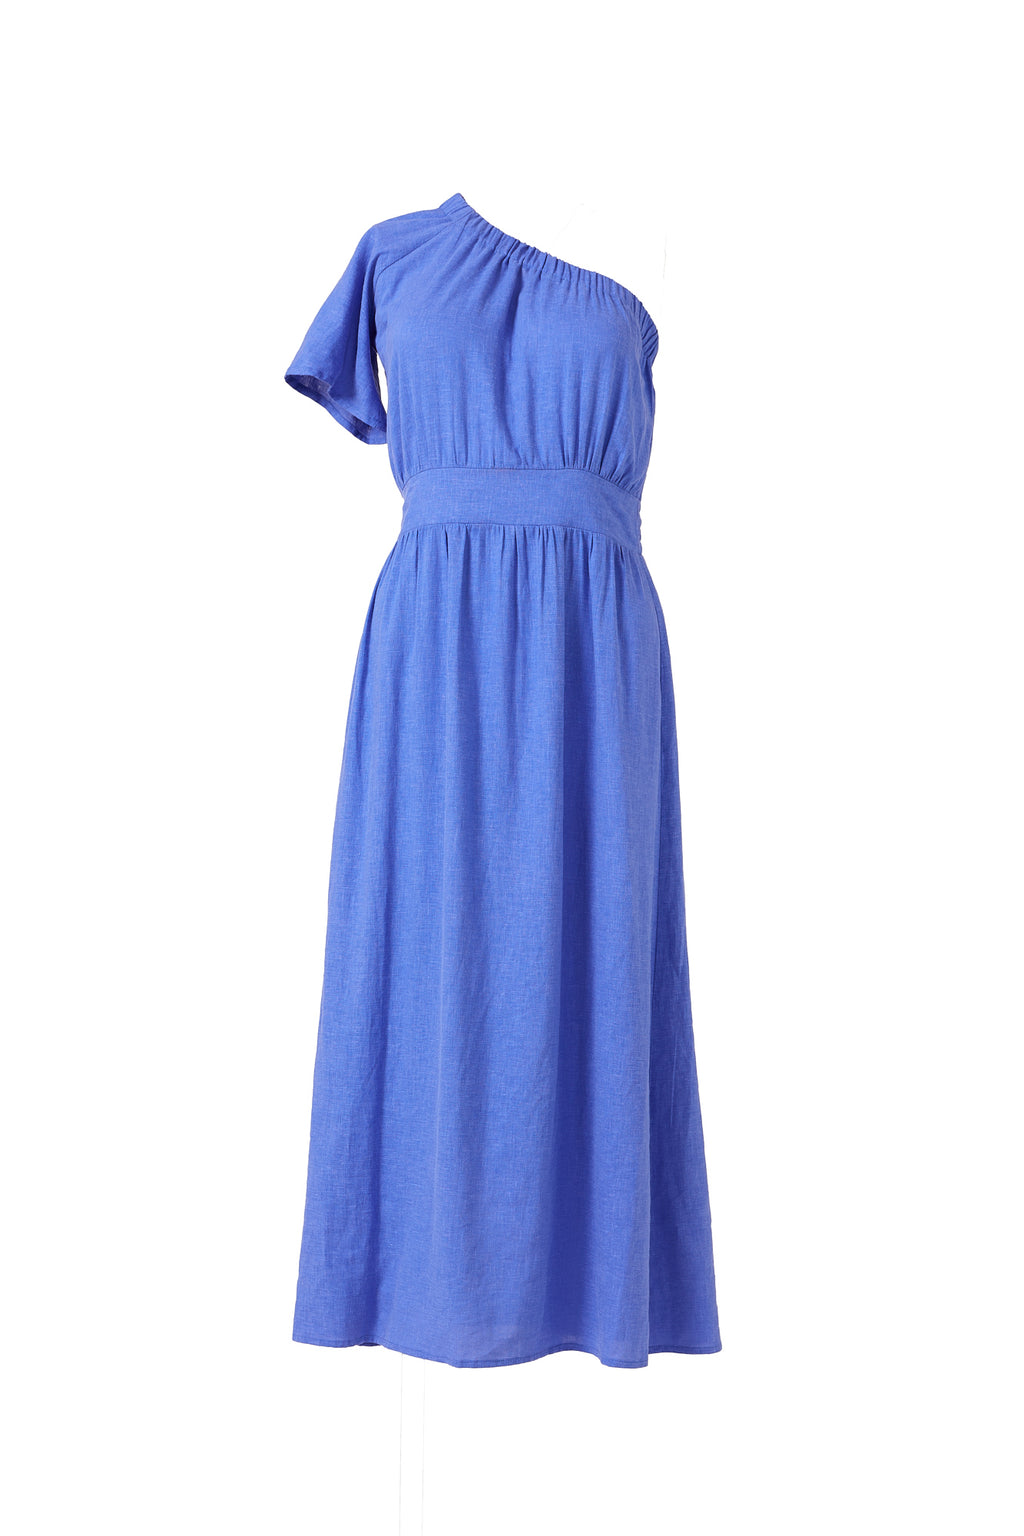 Paloma Dress in Cobalt blue